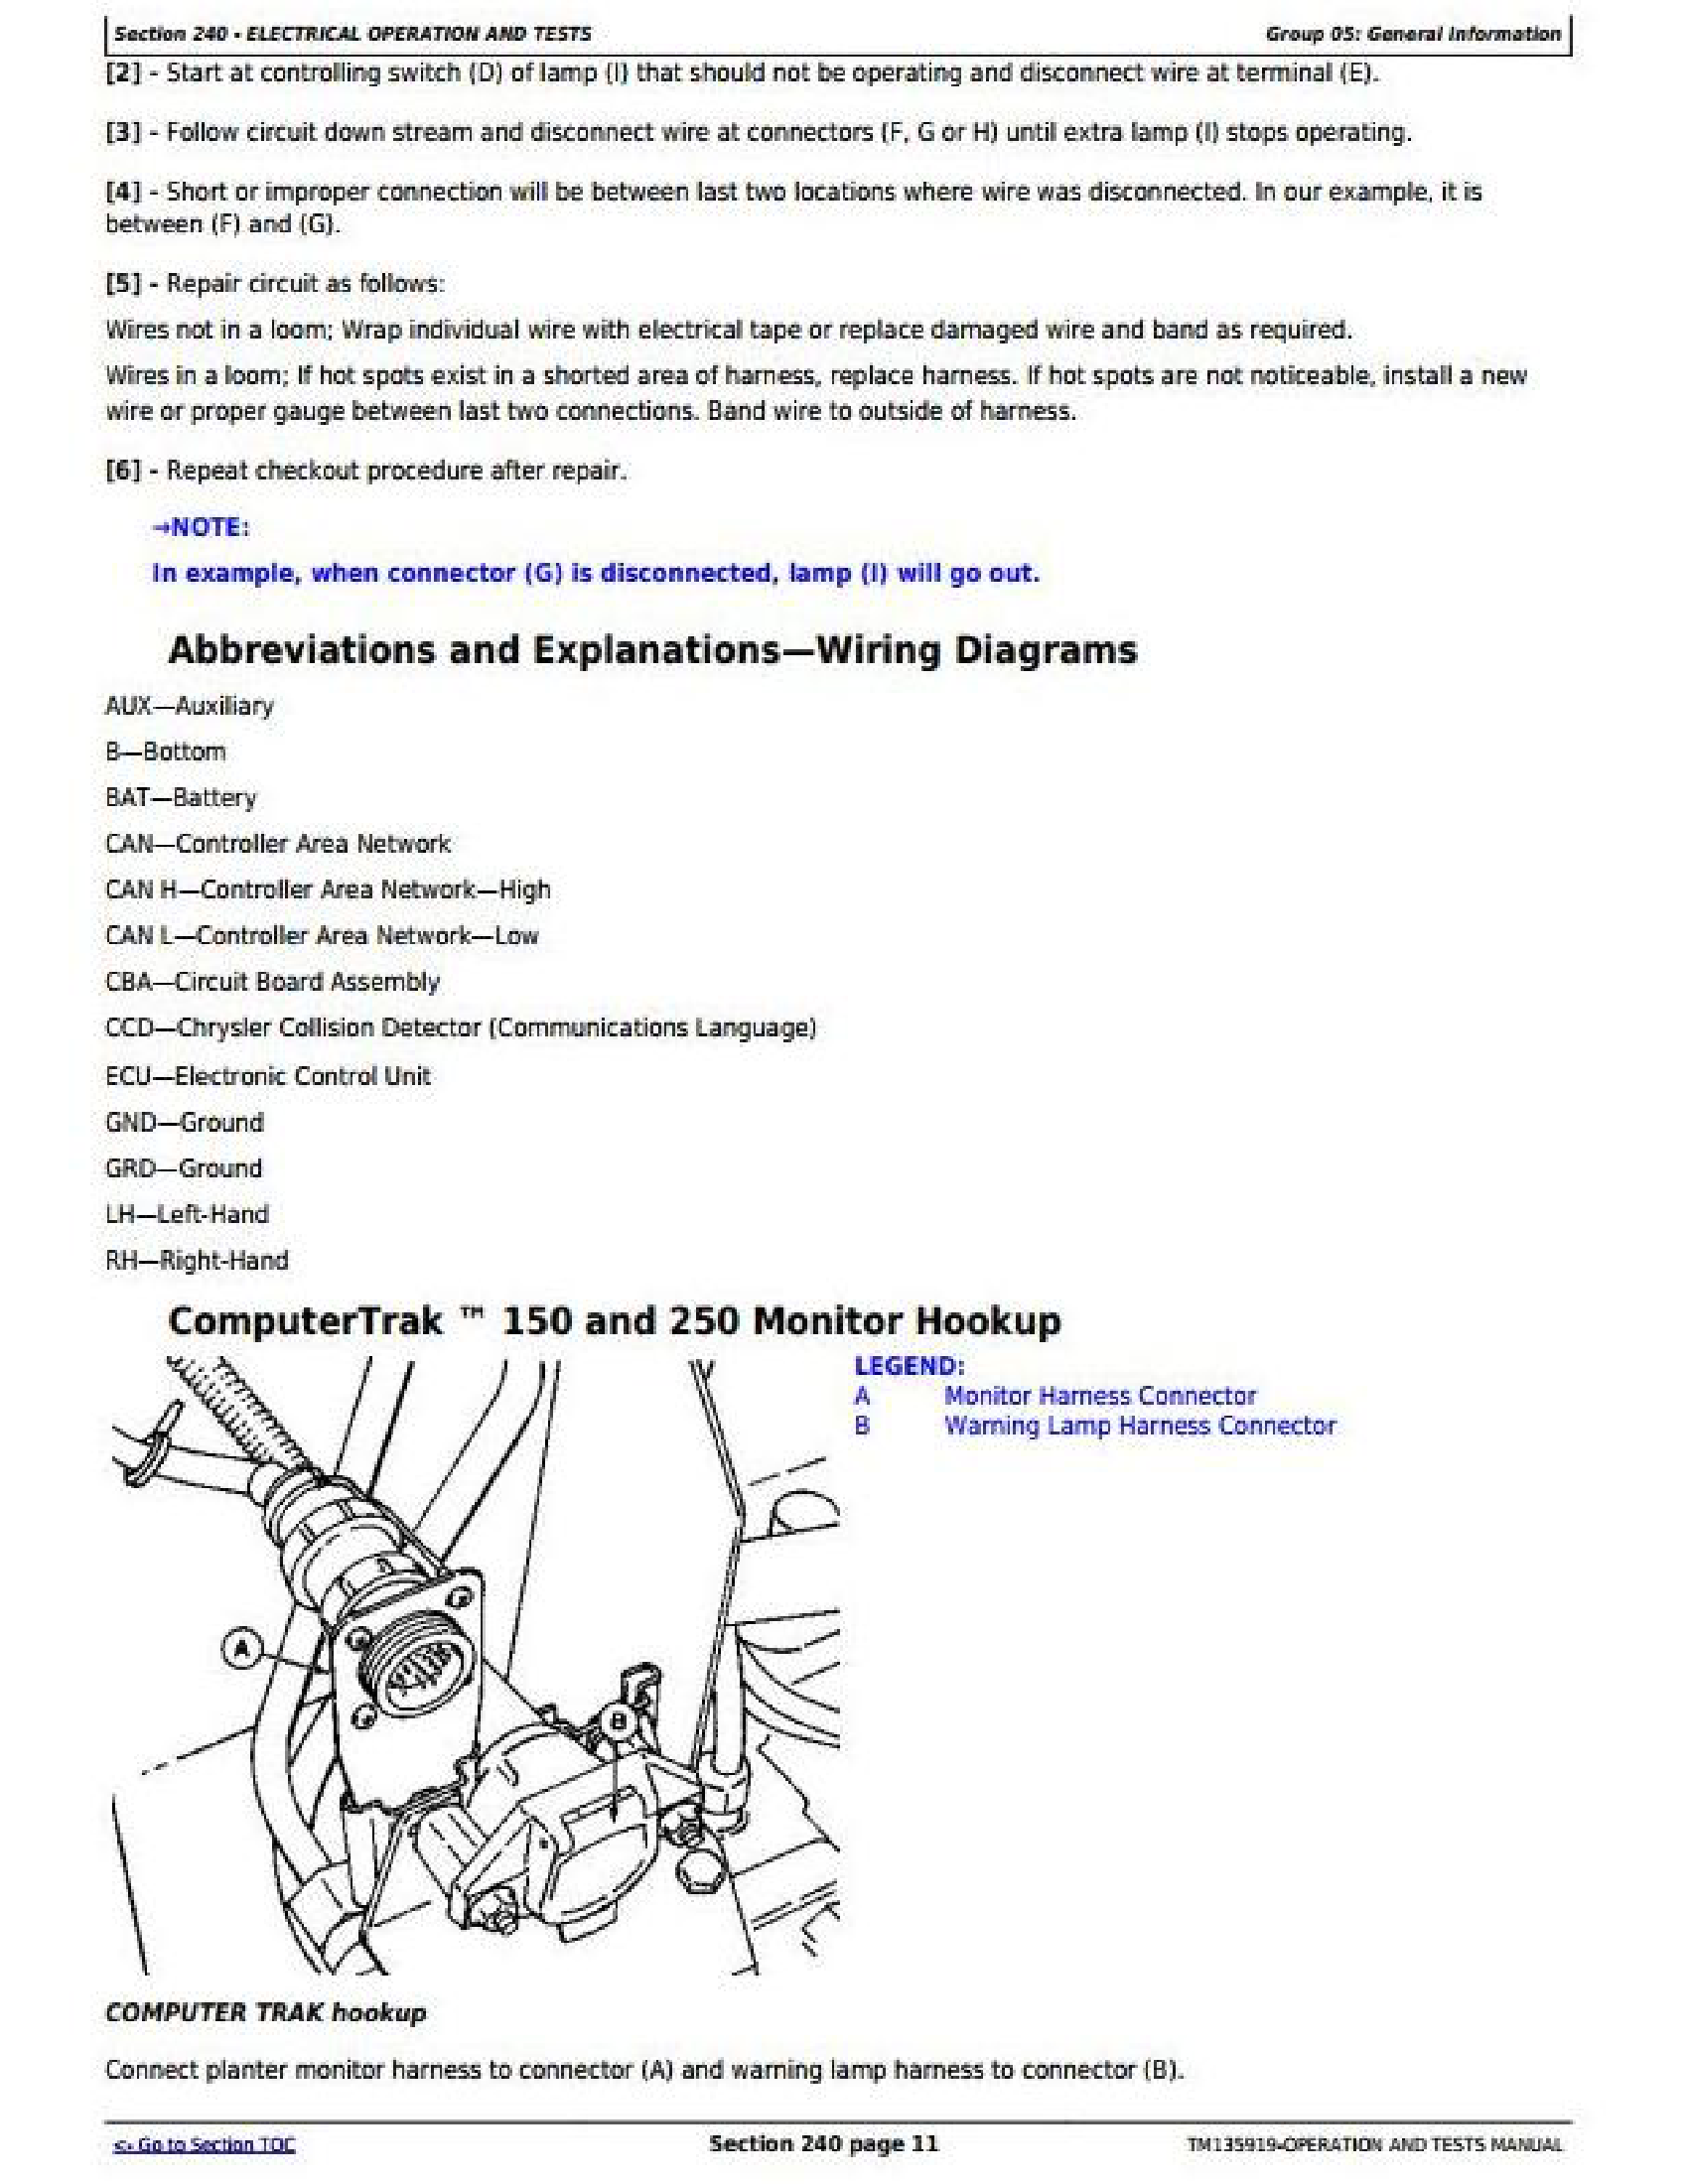 John Deere L341 manual pdf